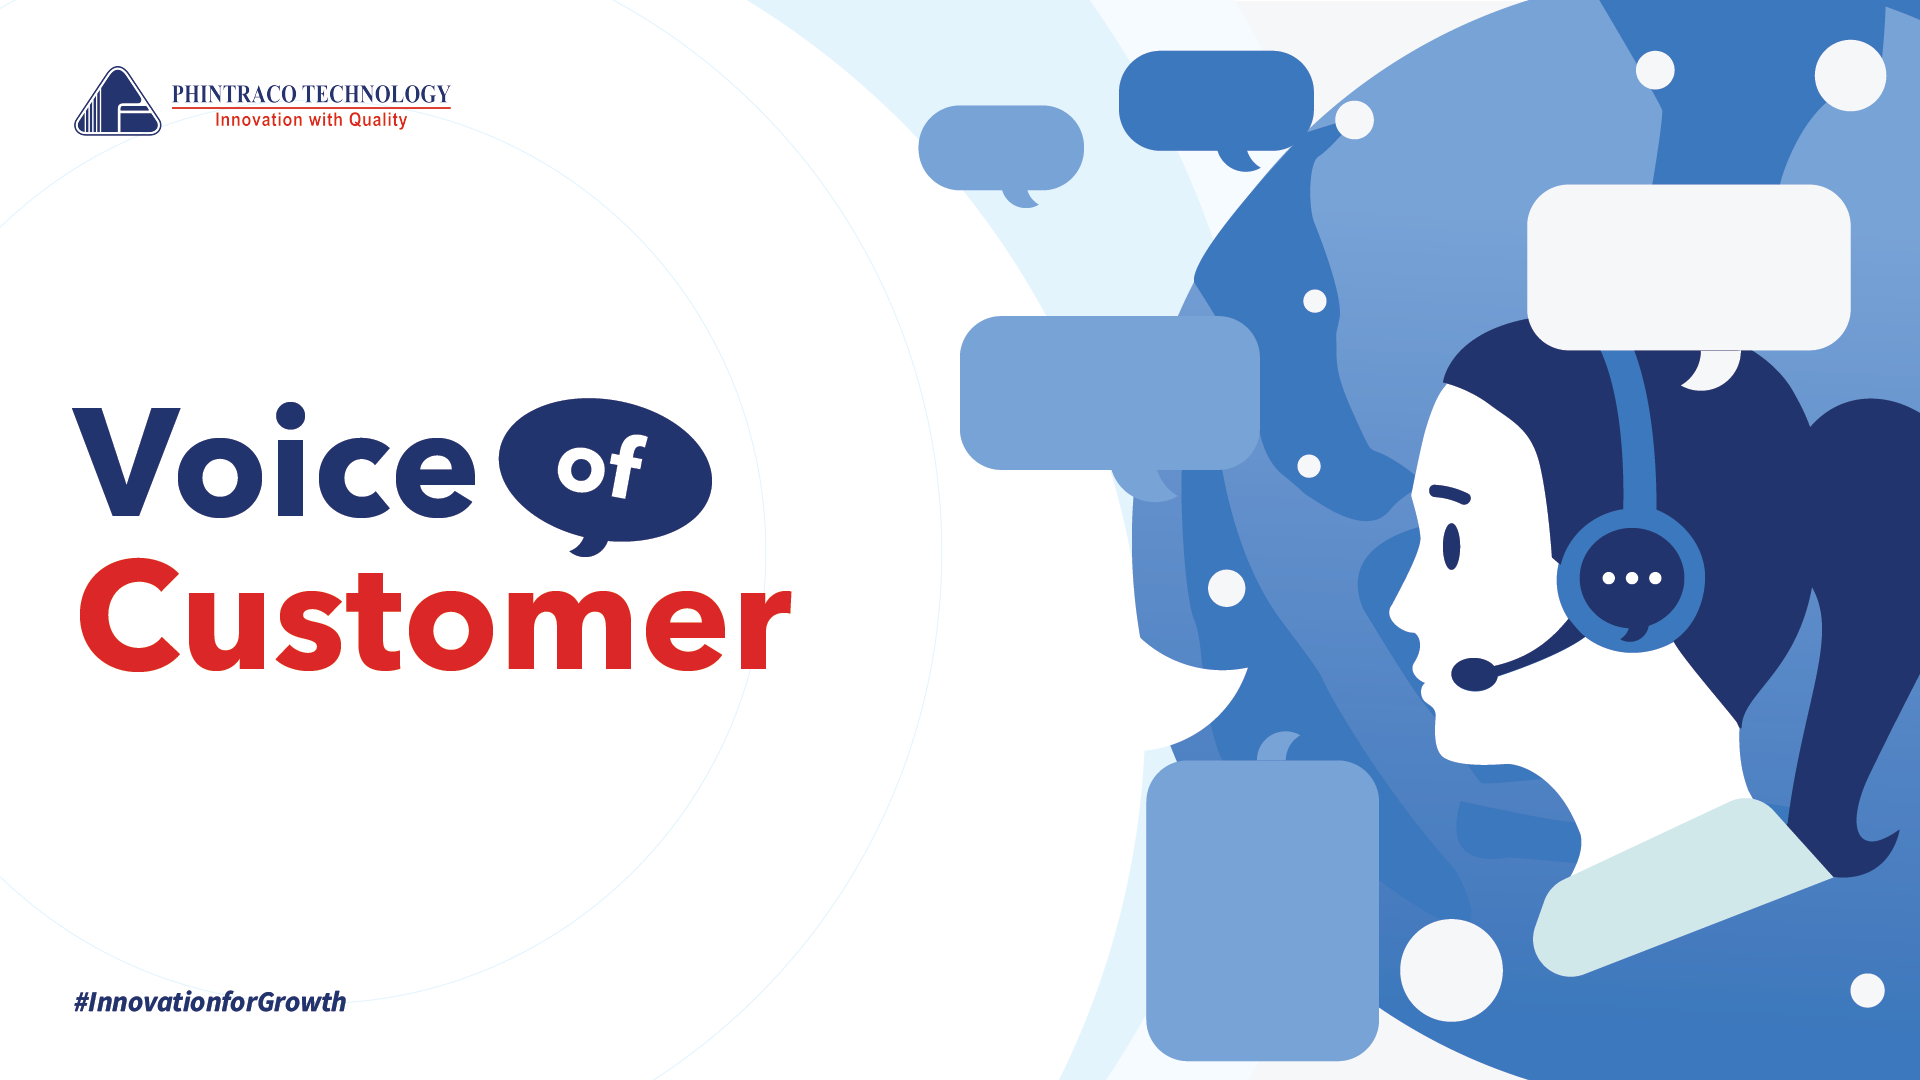 Voice of the Customer: Solusi Memahami Kebutuhan Pelanggan